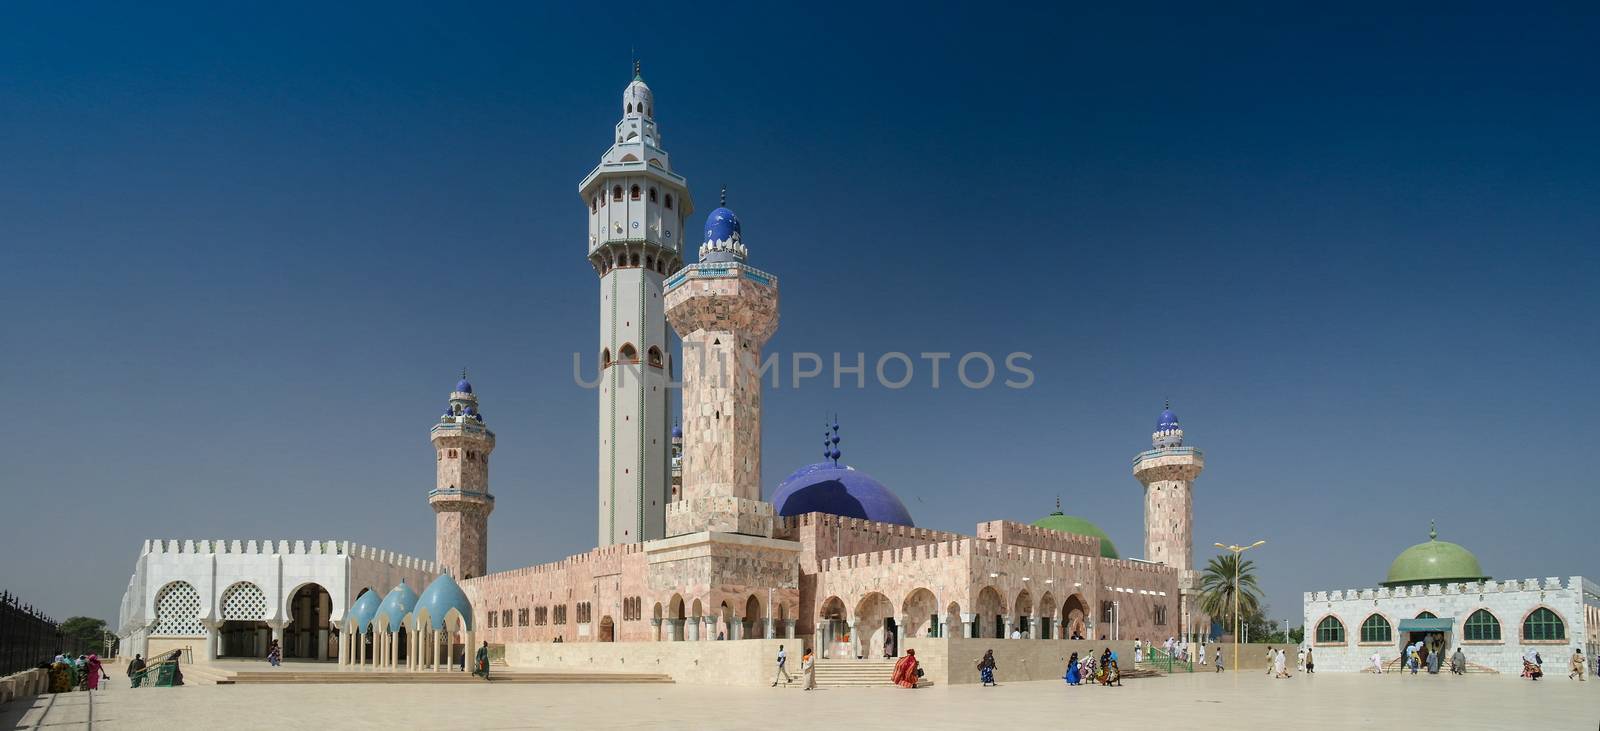 Touba Mosque, center of Mouridism, Senegal by homocosmicos